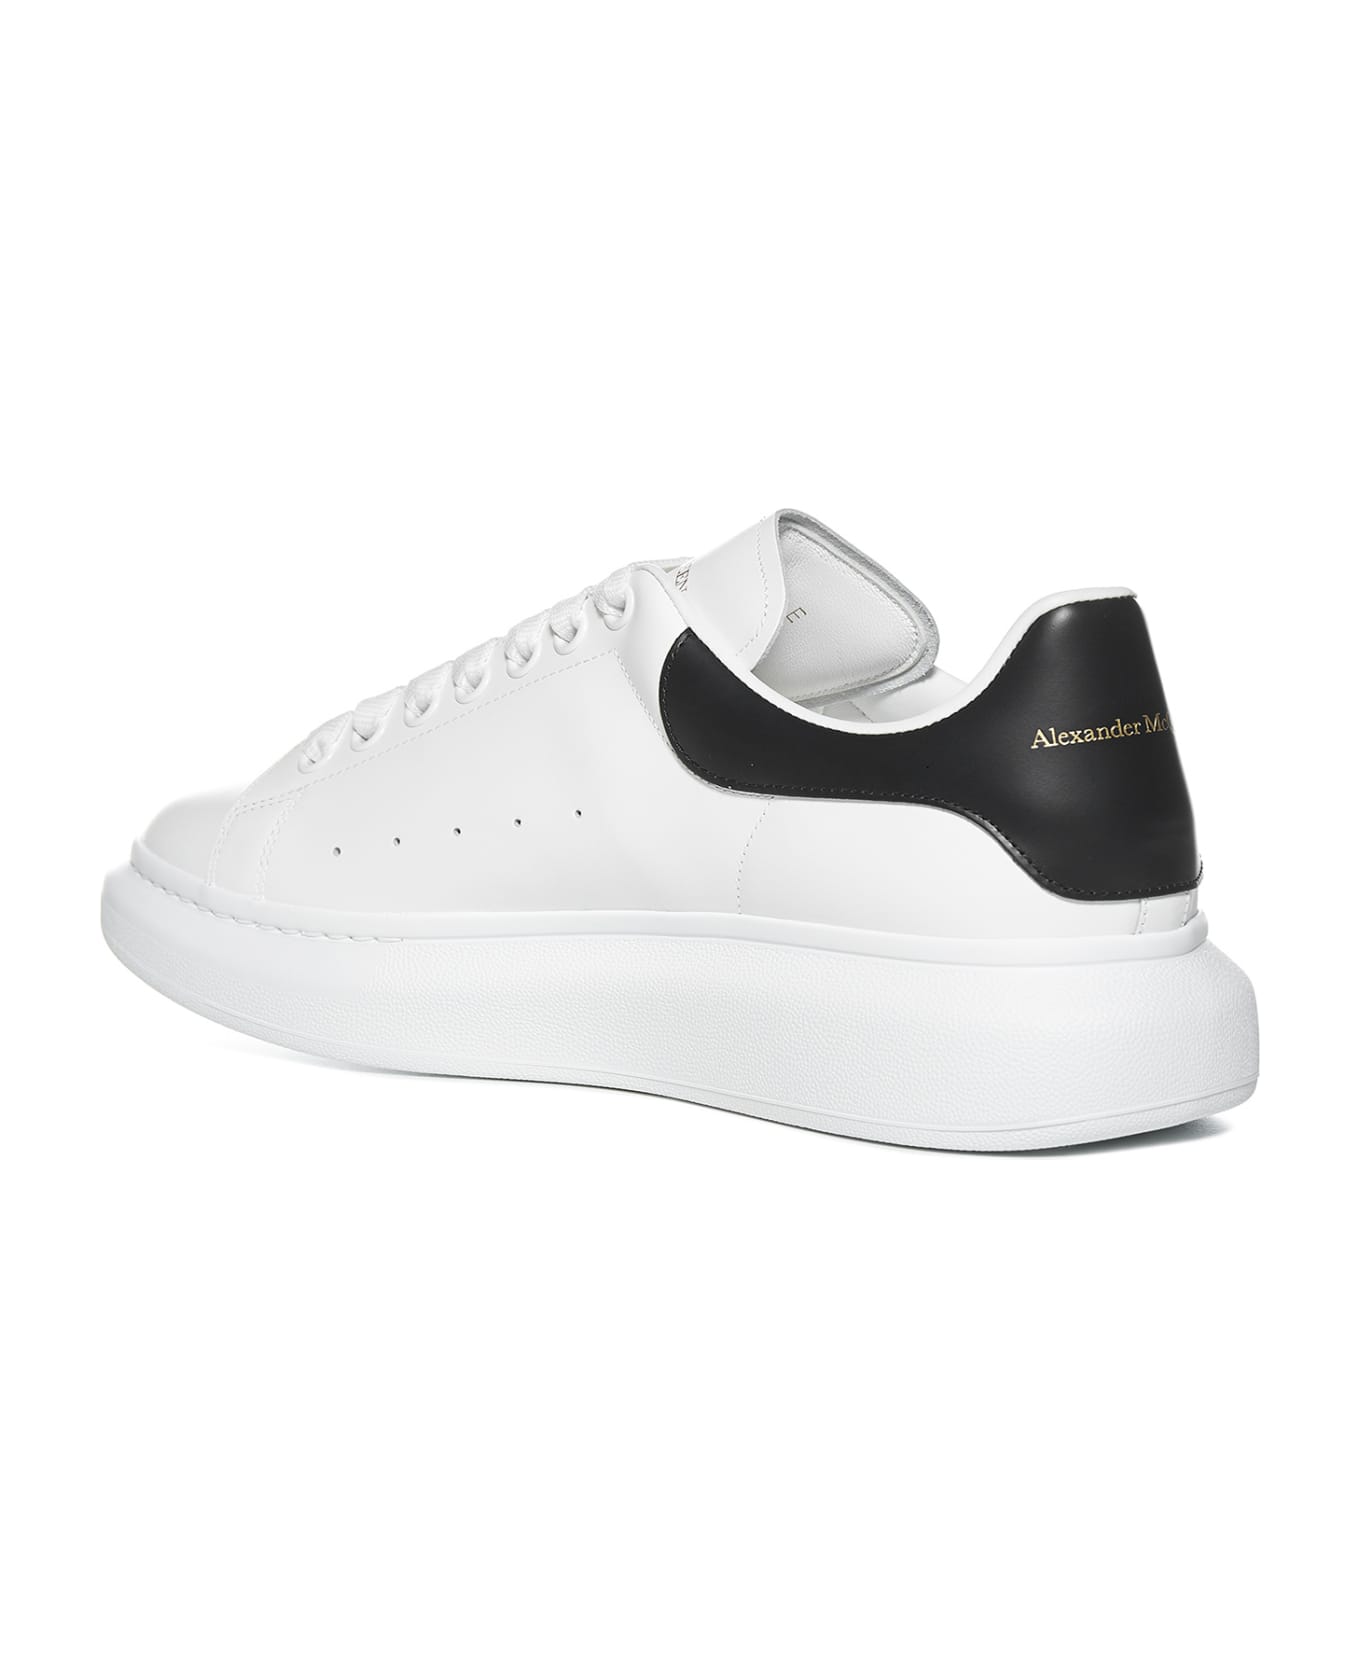 Alexander McQueen Oversize Leather Sneakers - White/black